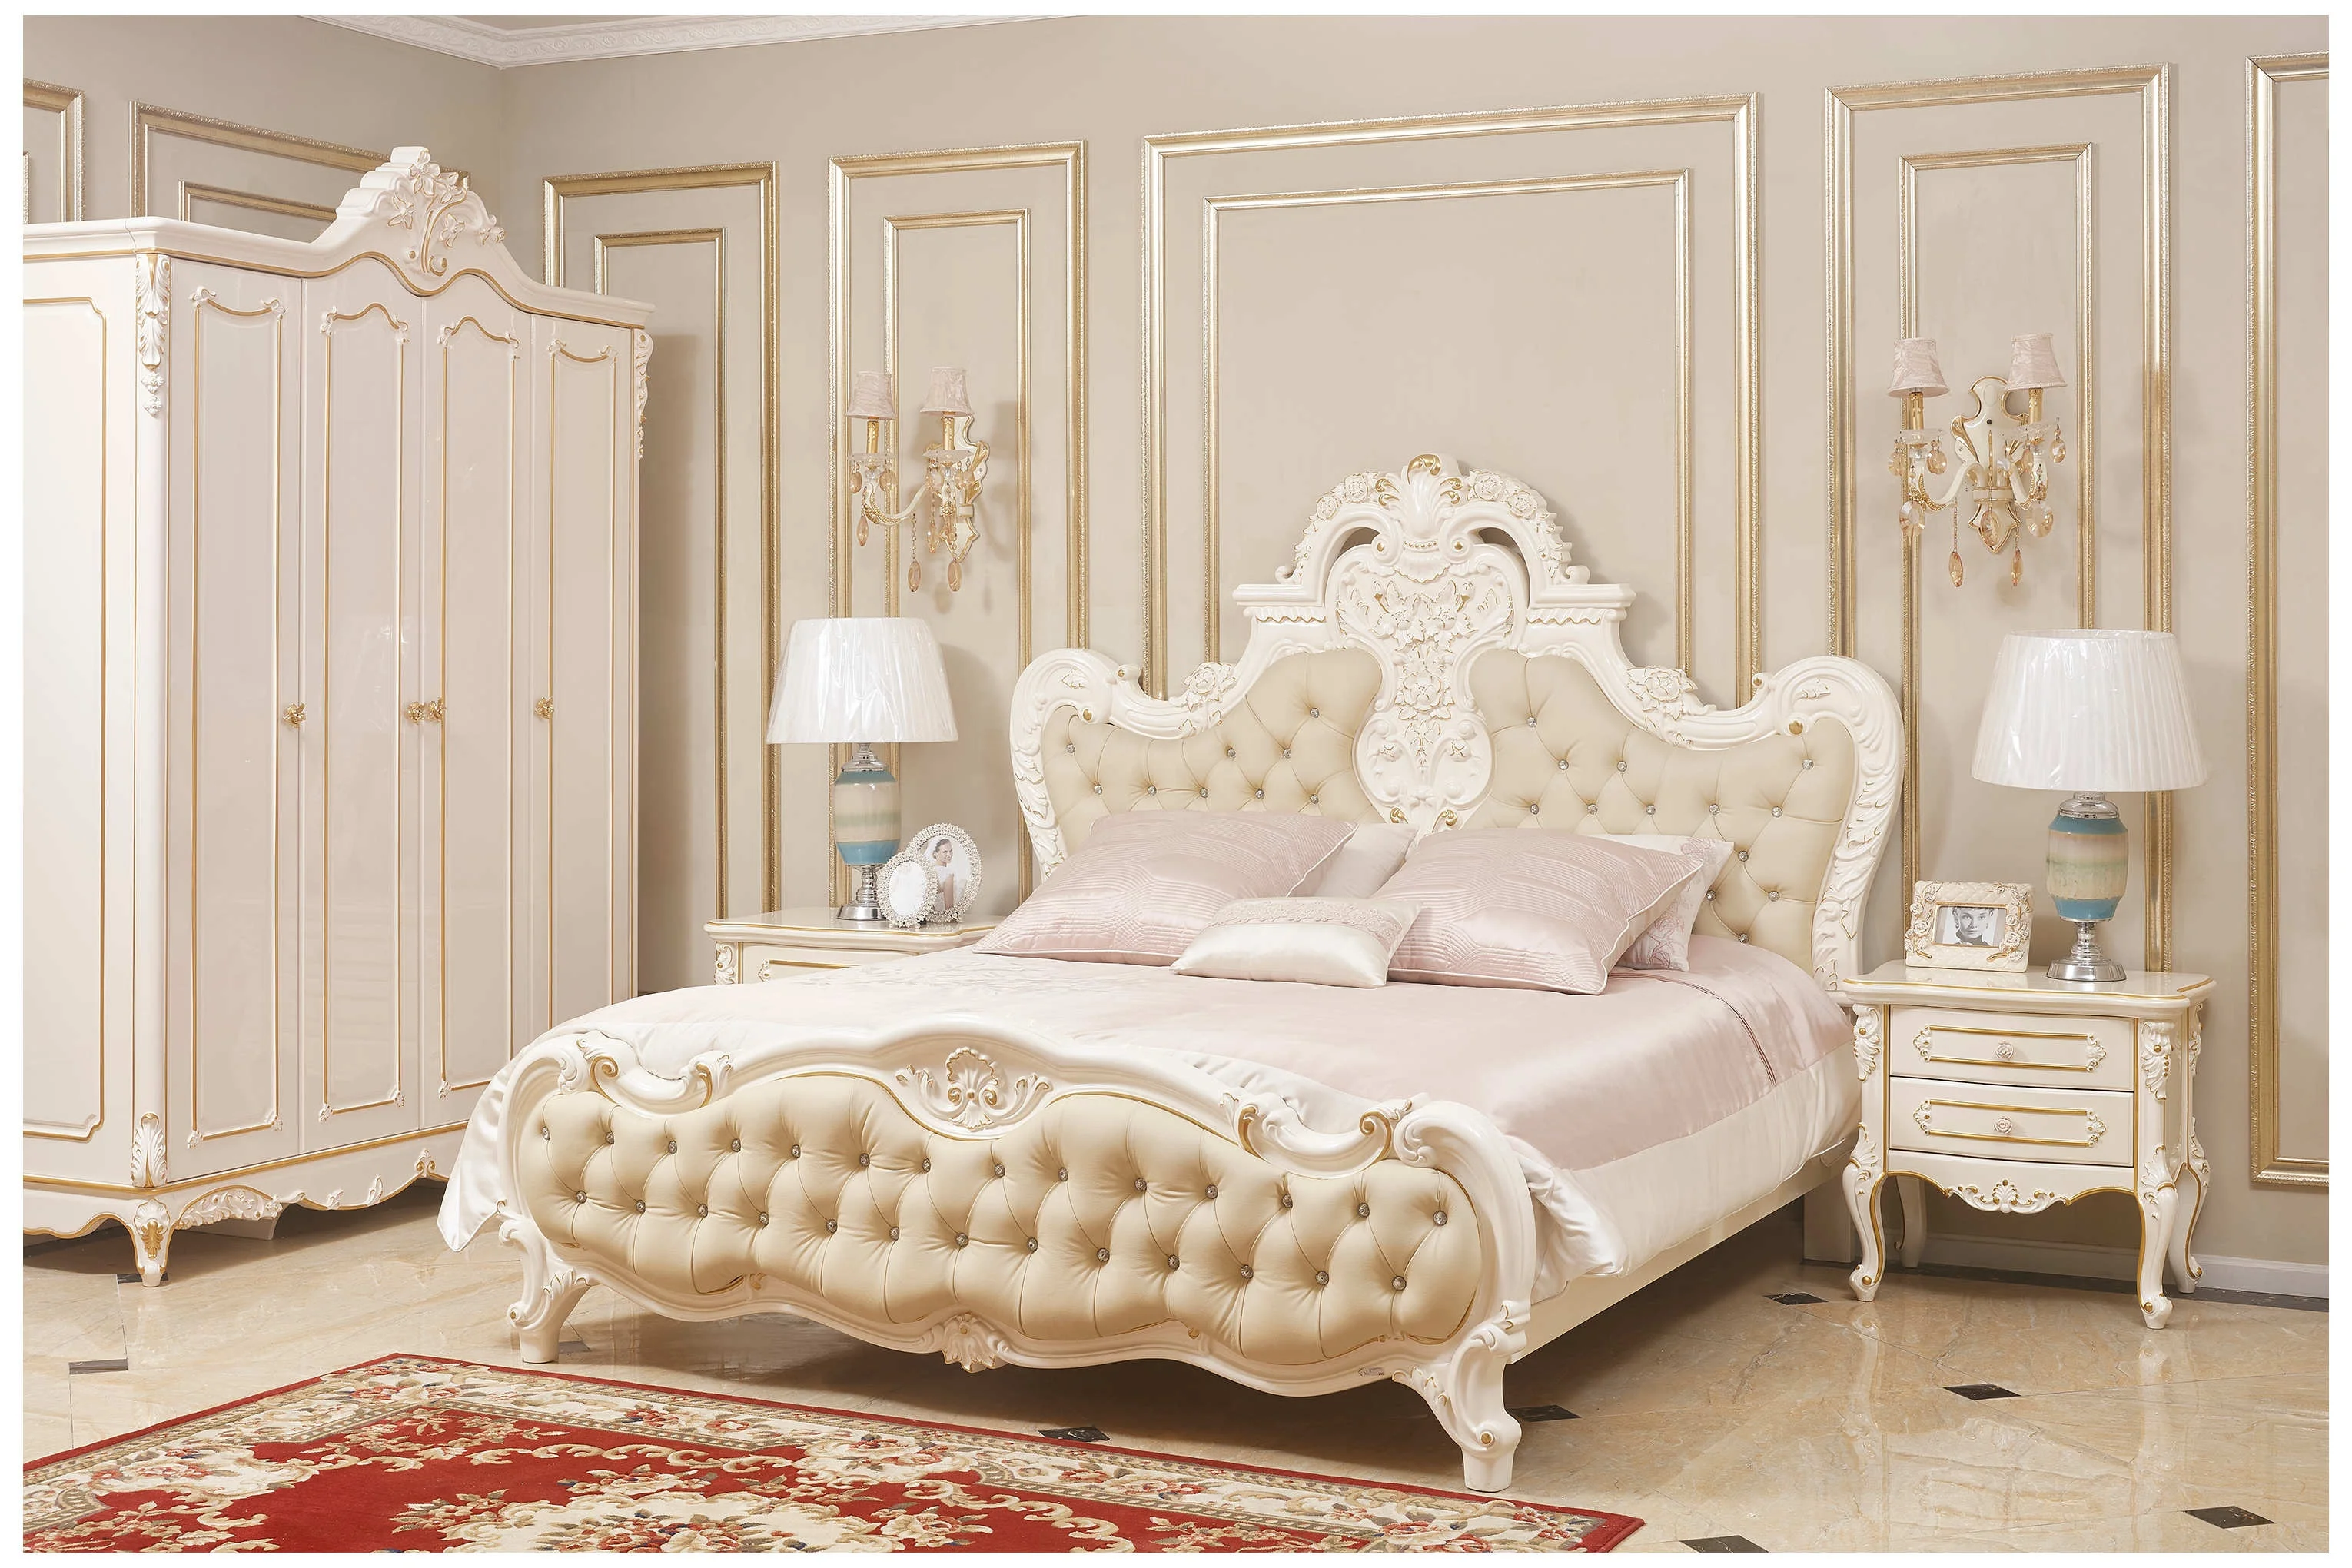 European Style Solid Wood Bed Italian Luxury Style Bedroom Furniture Sets Buy Bedroom Sets Bedroom Furniture Bed Room Furniture Set Product On Alibaba Com